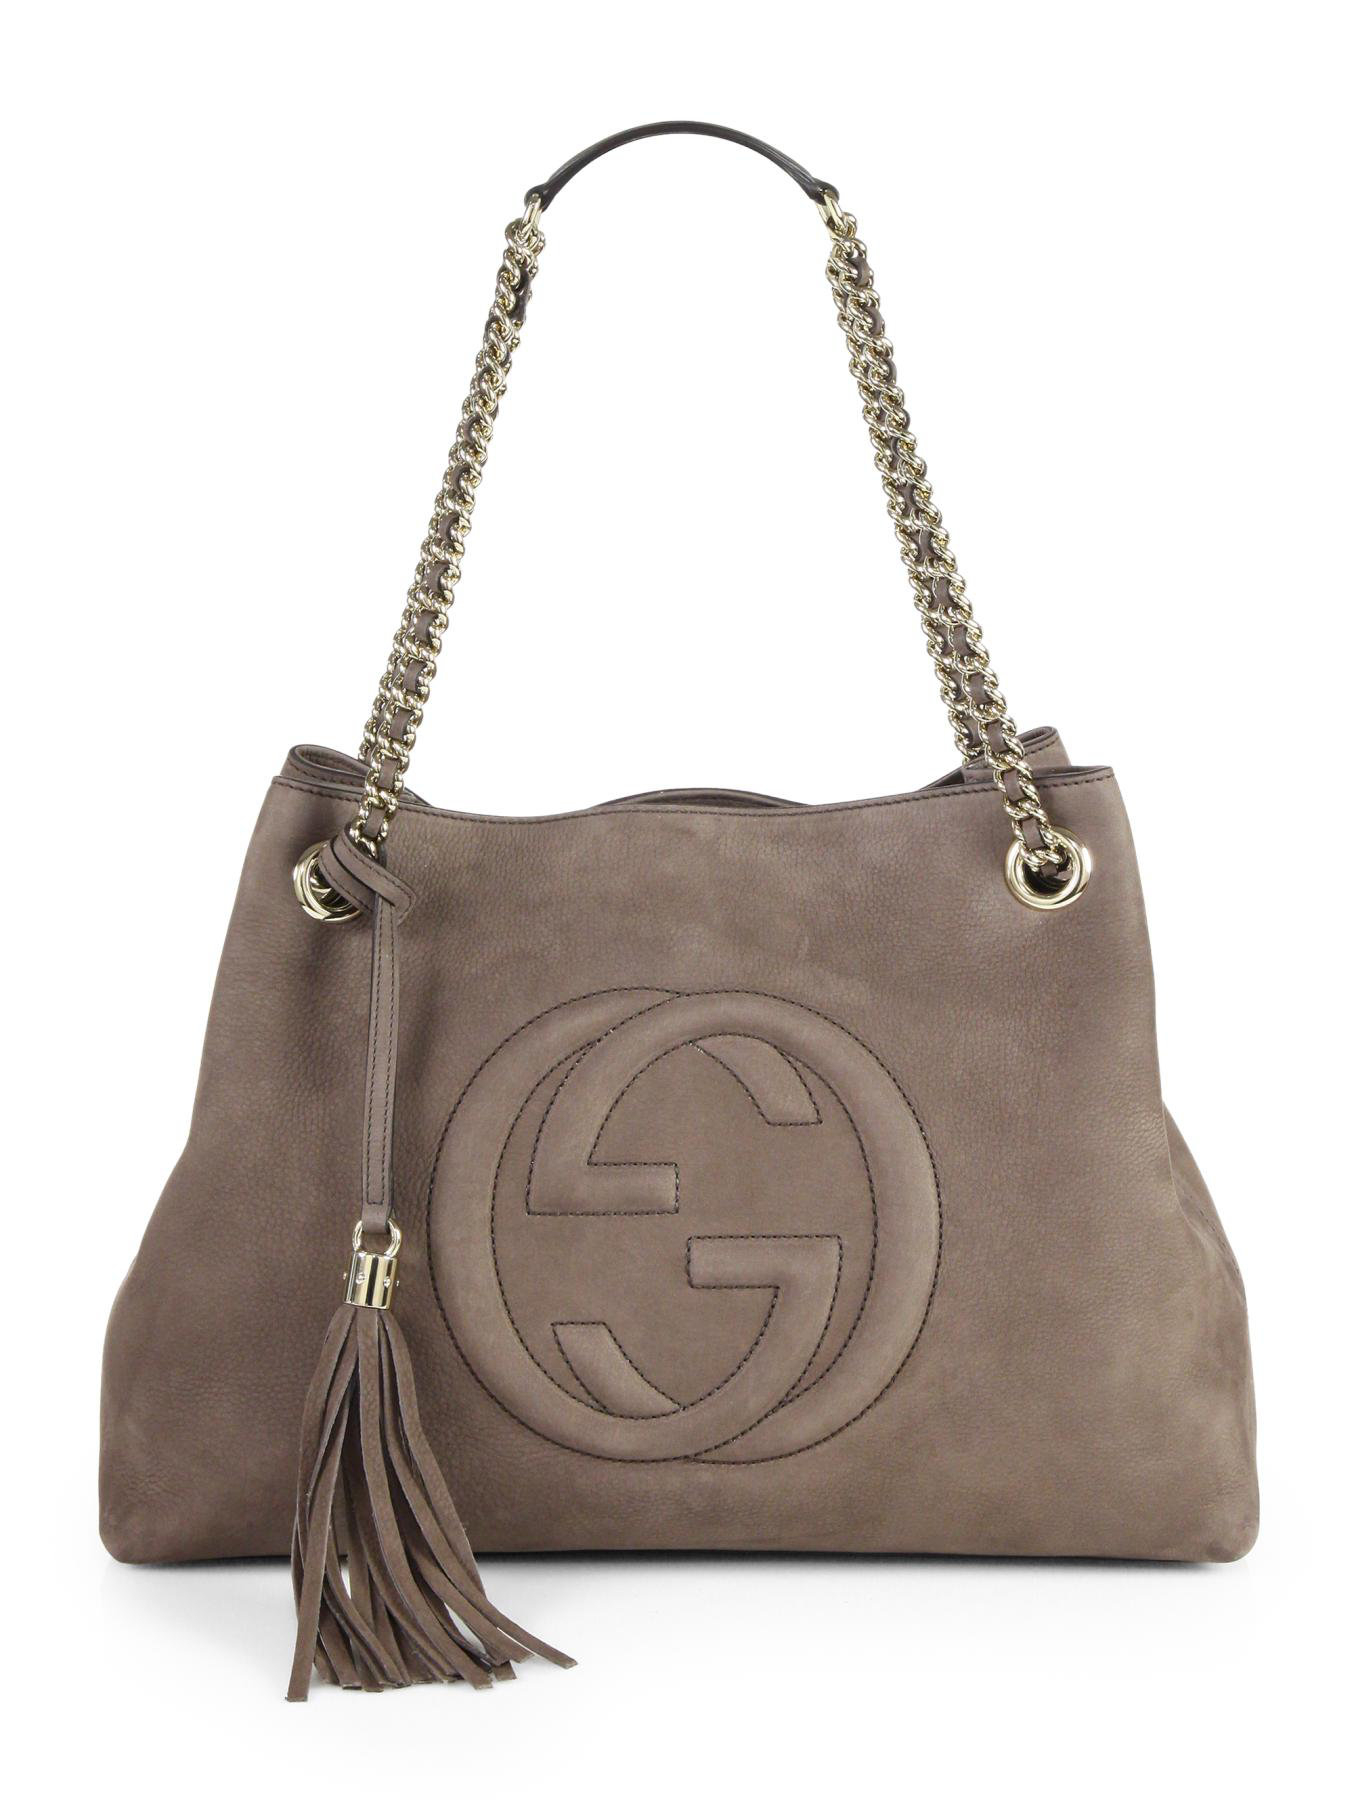 Gucci Soho Suede Shoulder Bag in Gray | Lyst